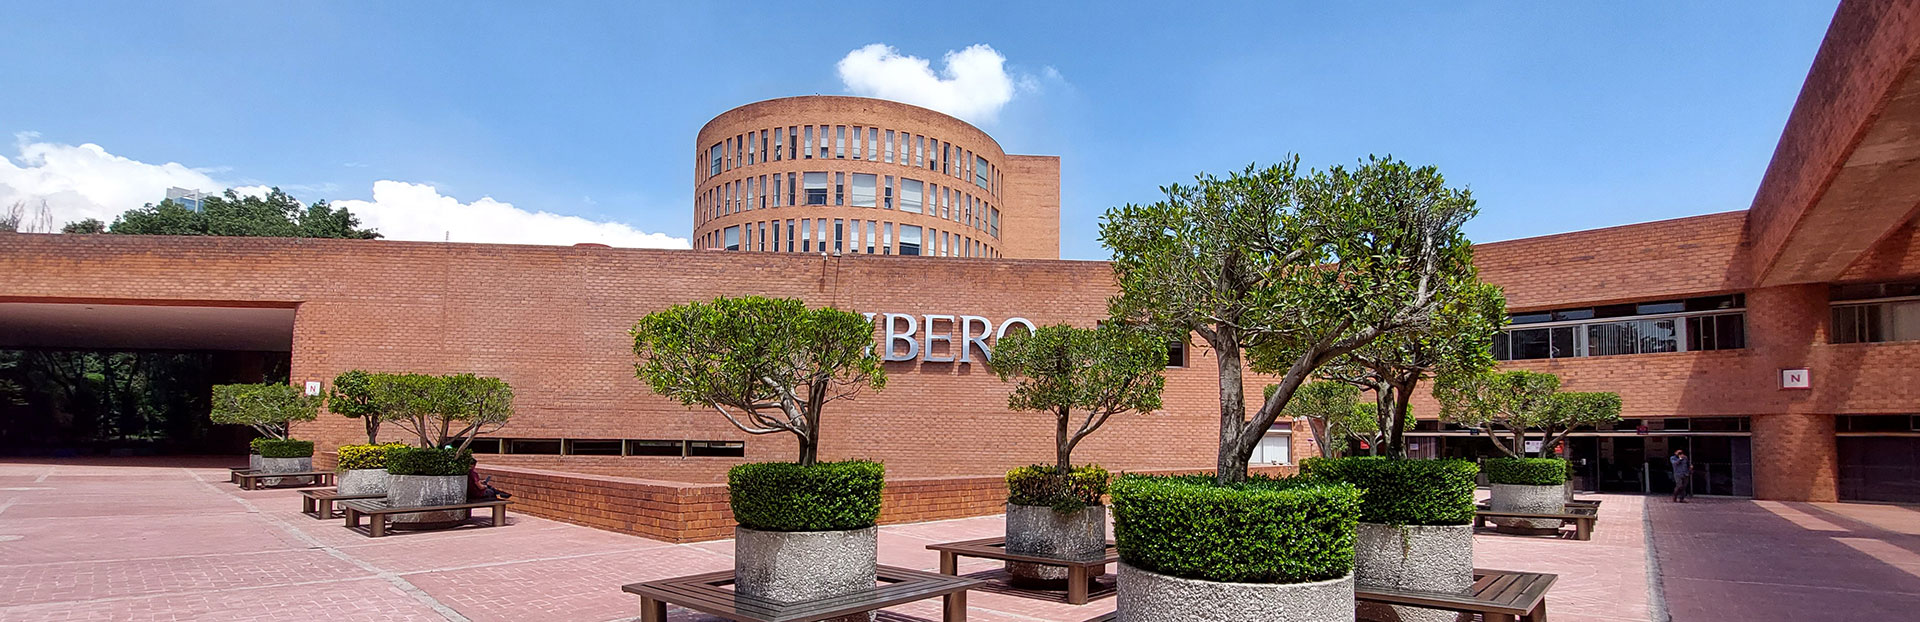 The IBEROamericana University: working towards a more just society in Mexico